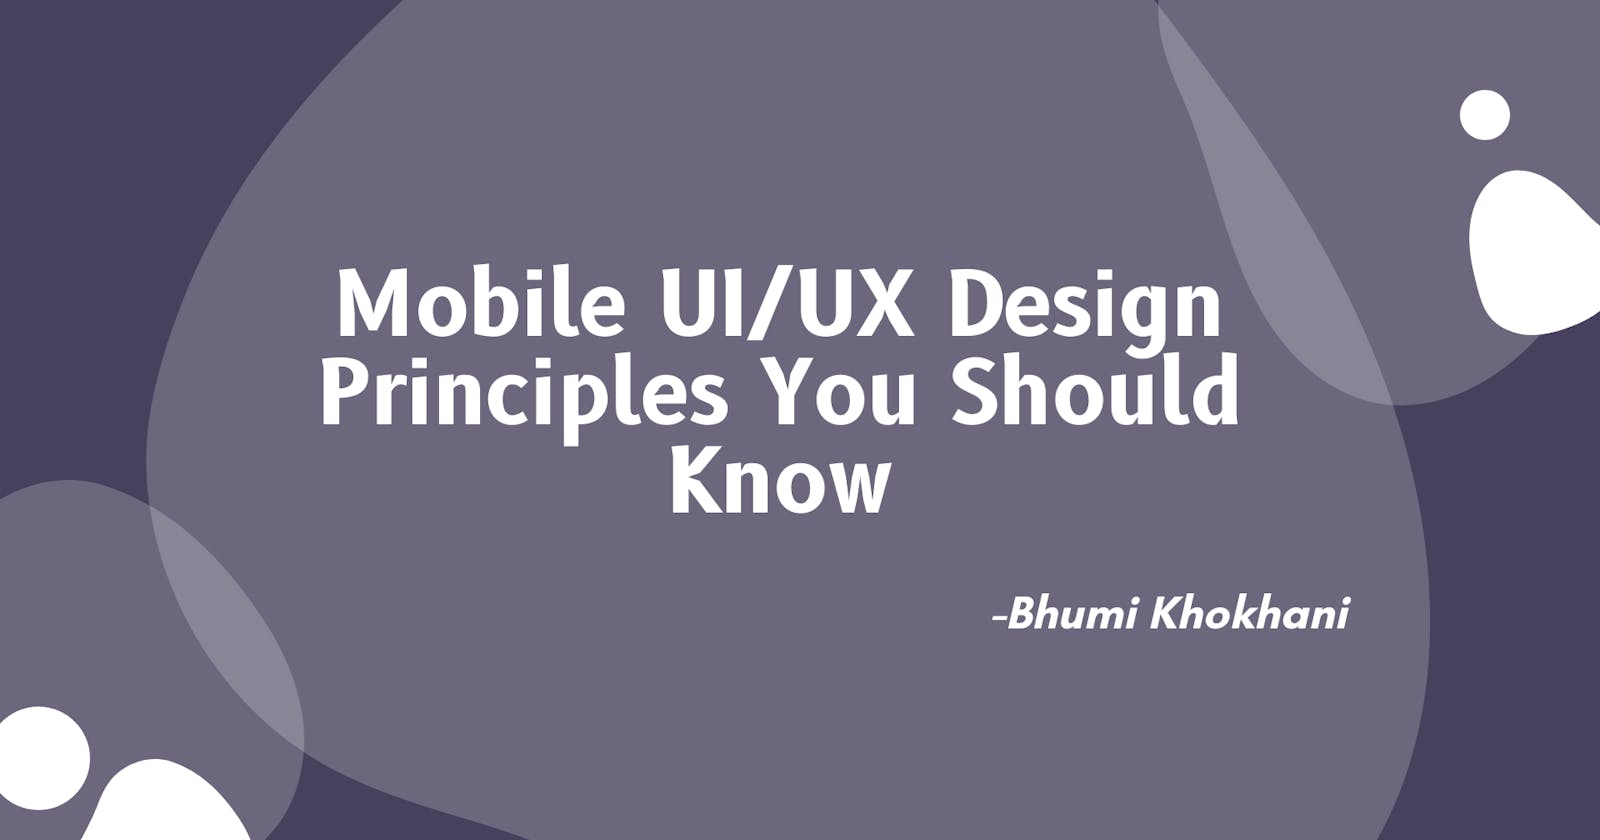 Mobile UI/UX Design Principles You Should Know